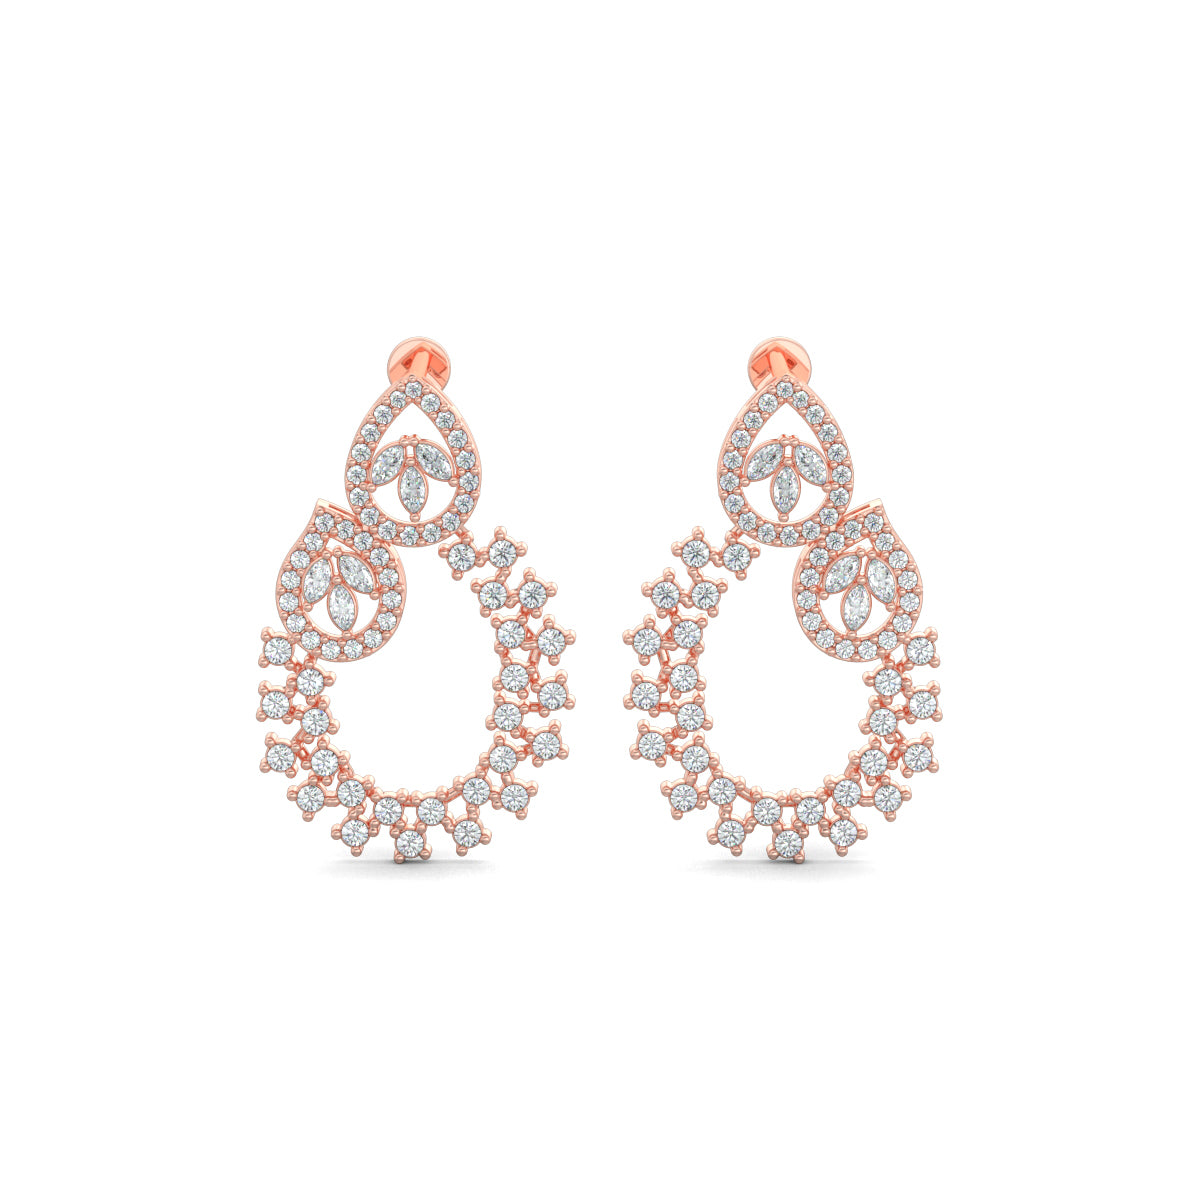 Rose Gold, Diamond Earrings, Natural diamond earrings, Lab-grown diamond earrings, traditional design earrings, mid-length diamond earrings, pear-shaped diamonds, oval diamond earrings, marquise-cut diamonds, round diamonds, elegant diamond jewelry